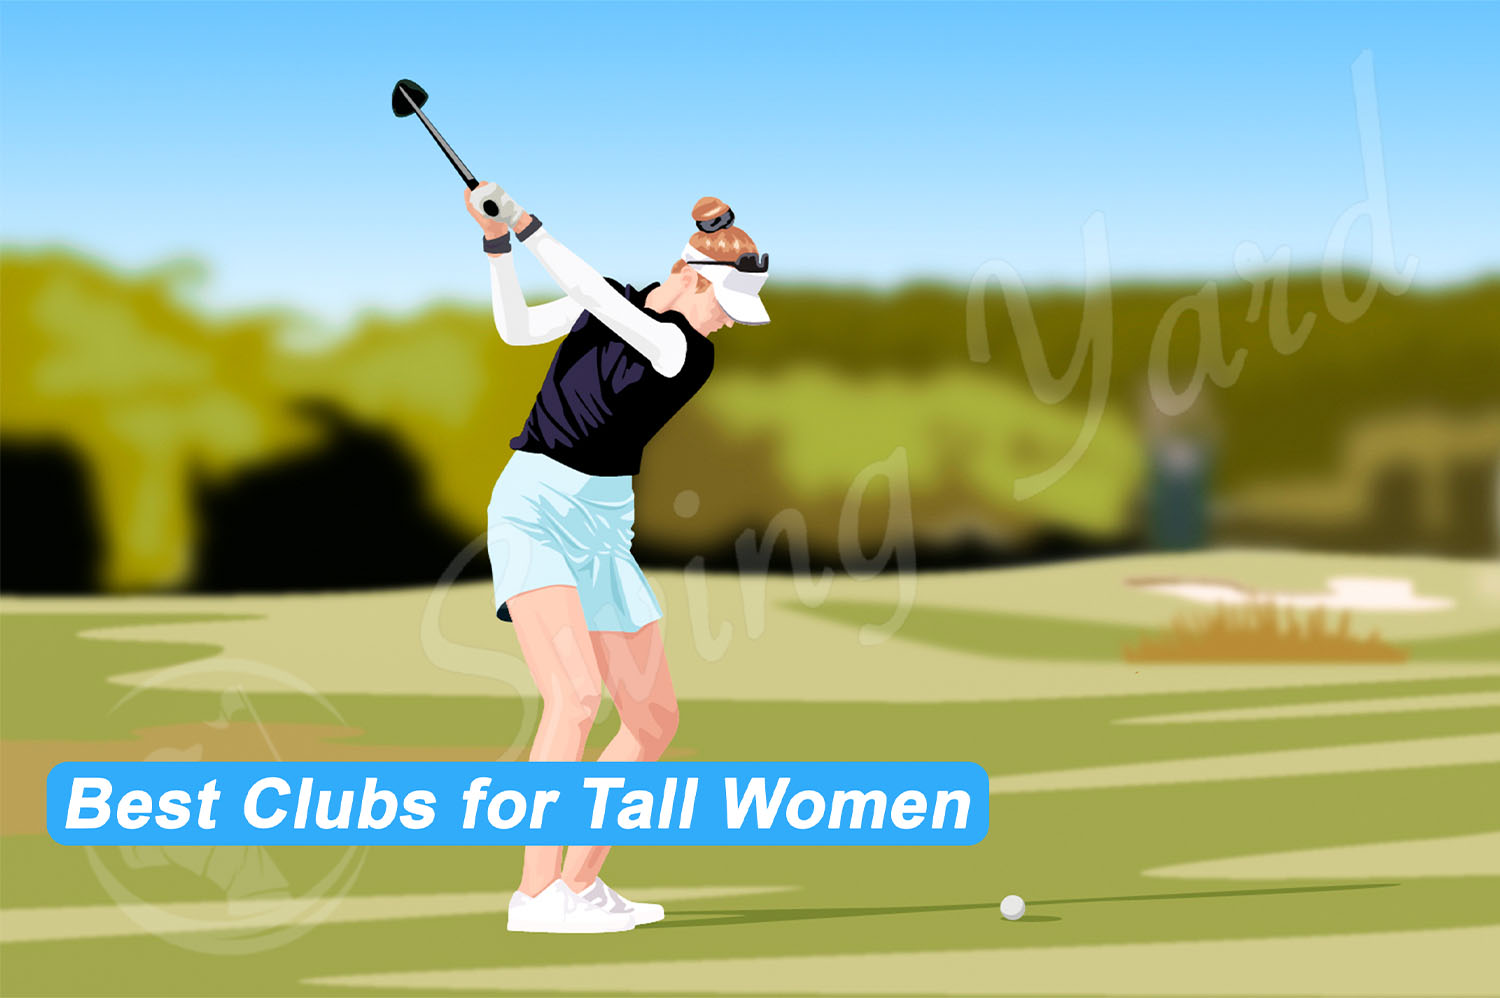 A tall woman golfer hitting the ball